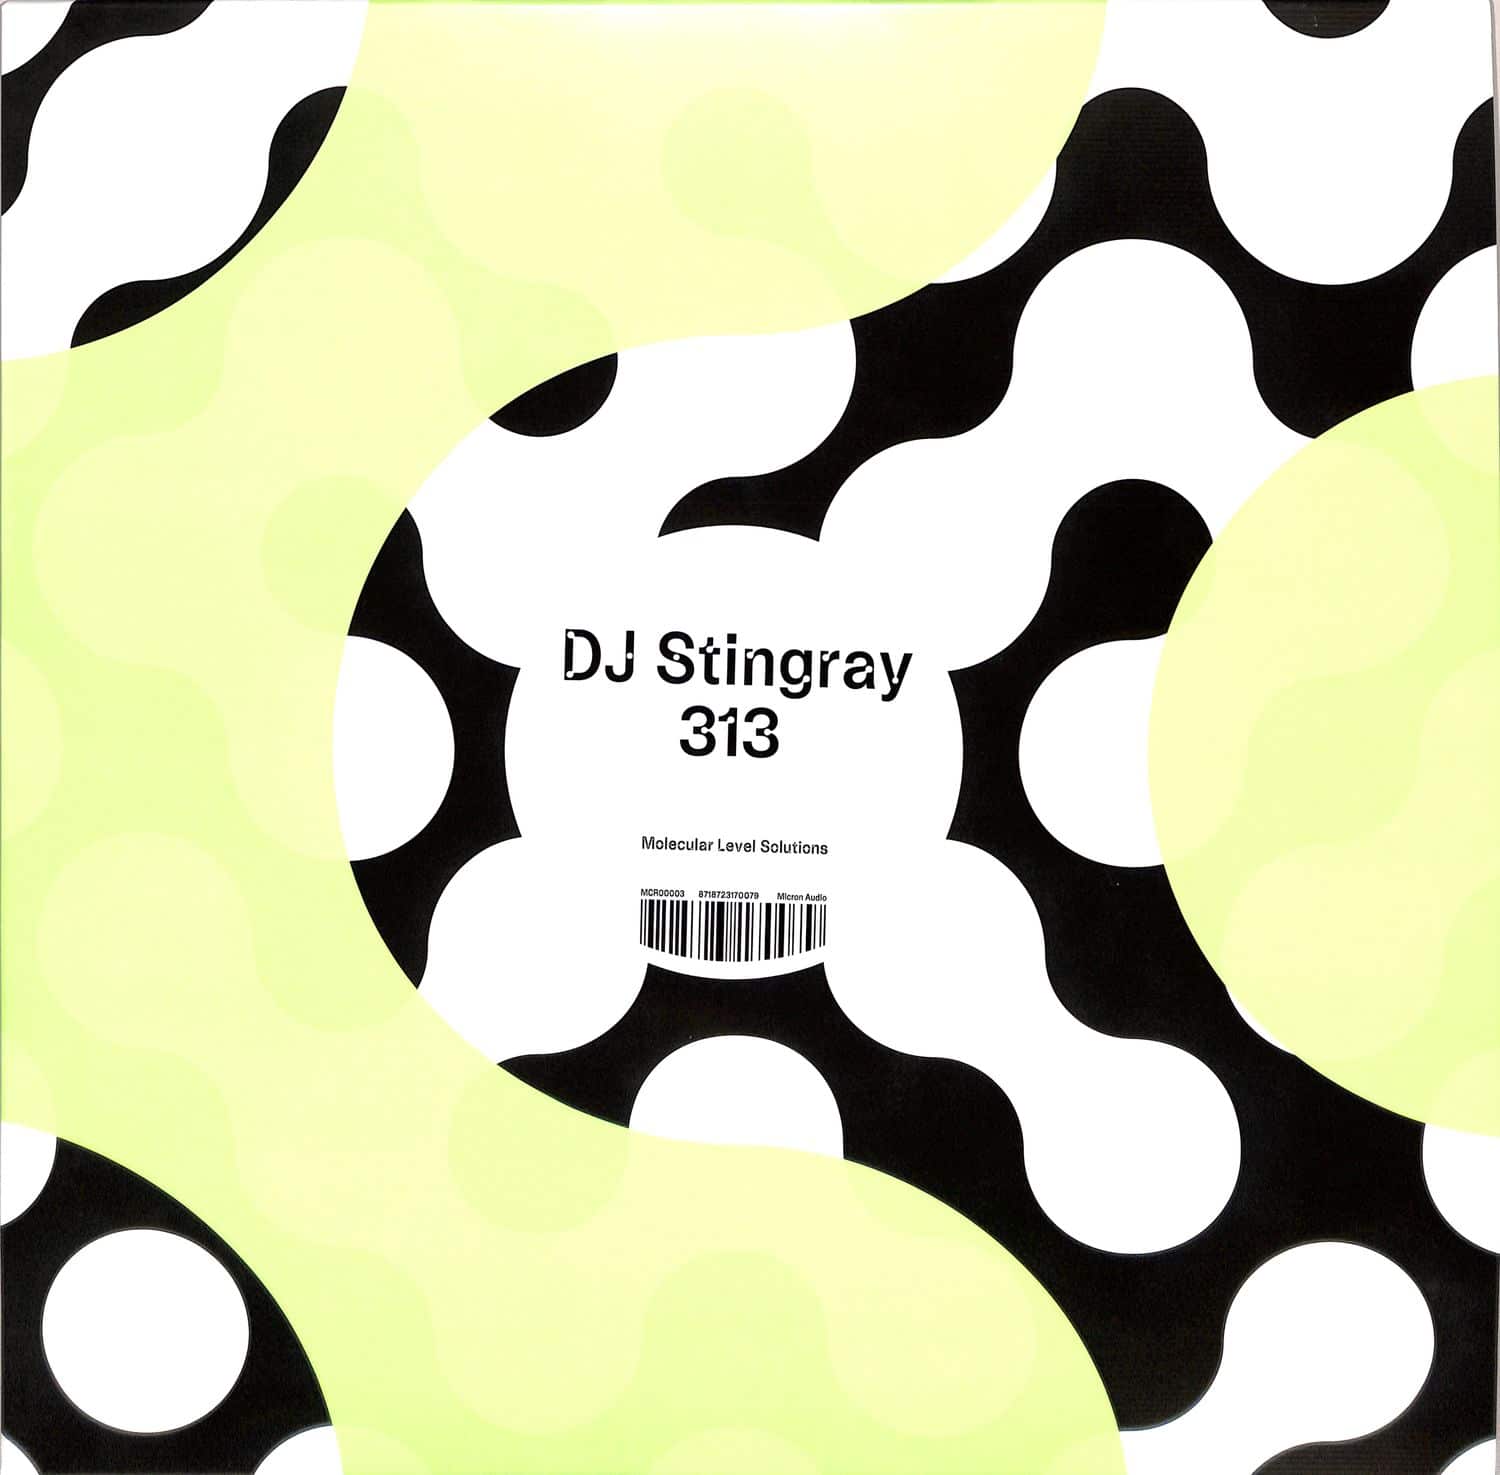 DJ Stingray 313 - MOLECULAR LEVEL SOLUTIONS